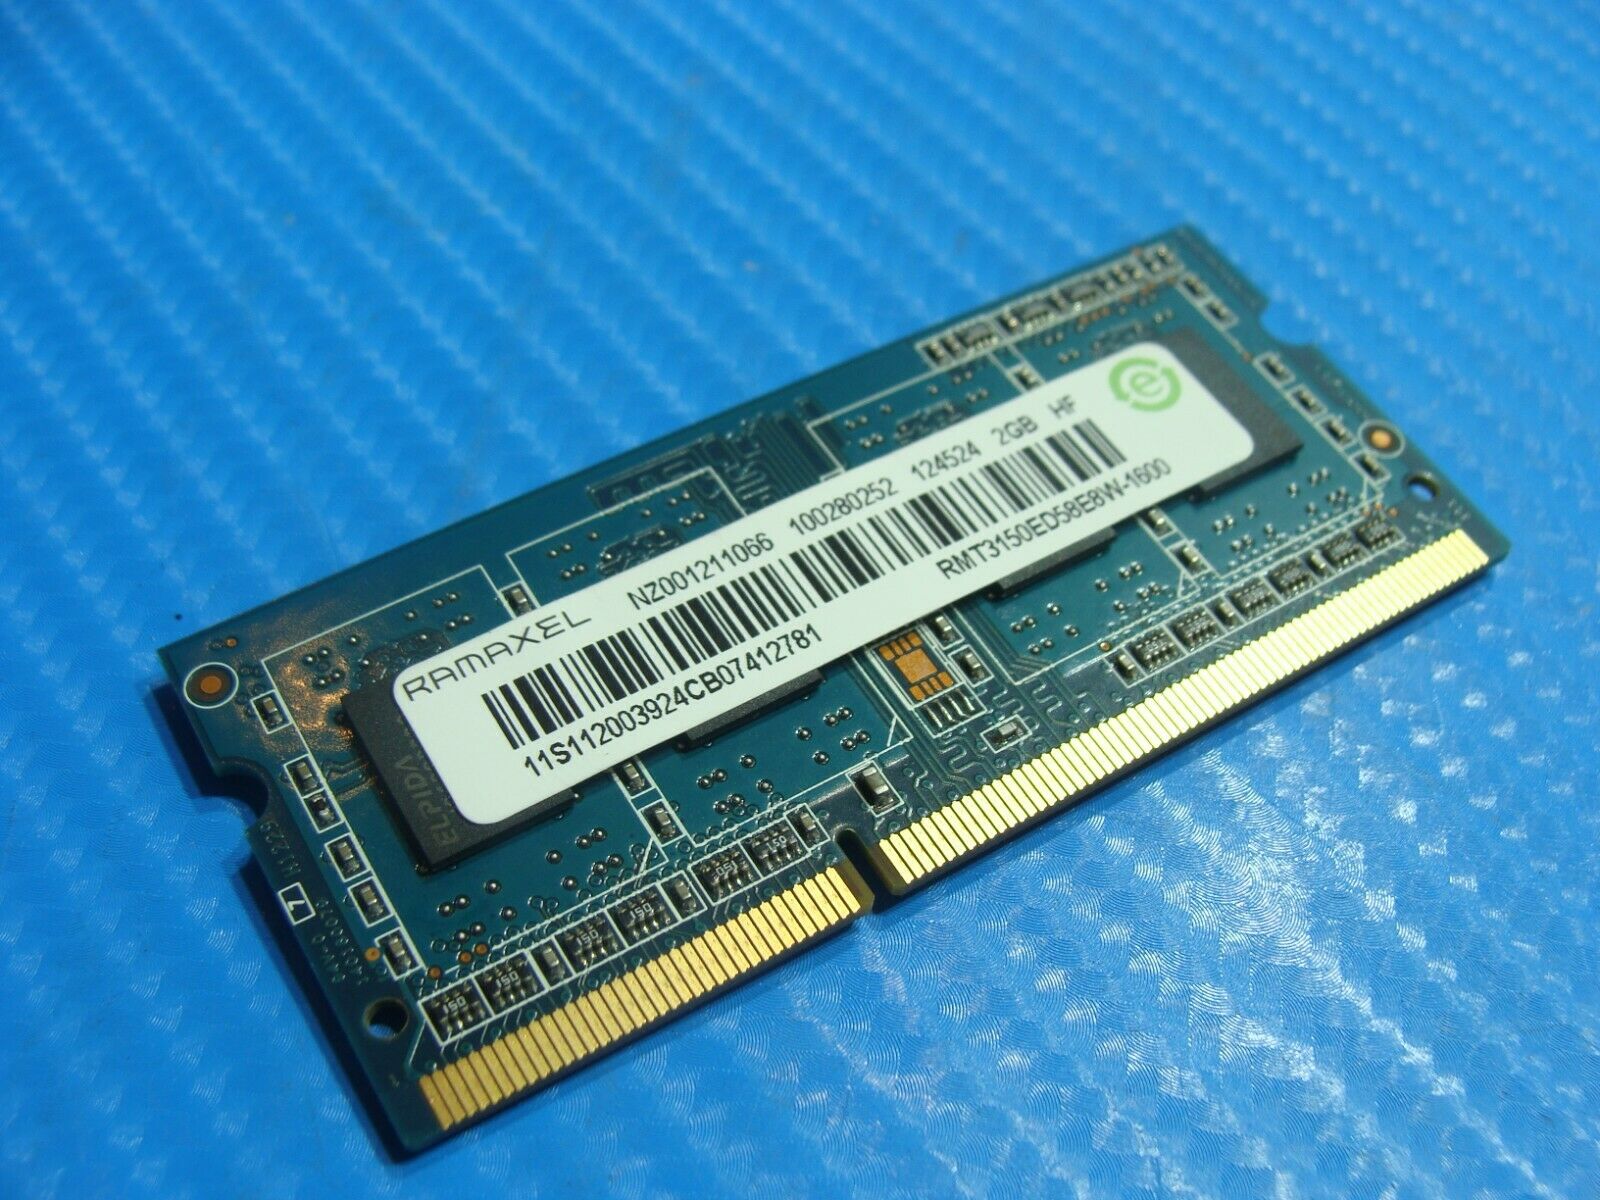 Lenovo Y580 20132 Ramaxel 2GB SO-DIMM Memory RAM RMT3150ED58E8W-1600 Ramaxel